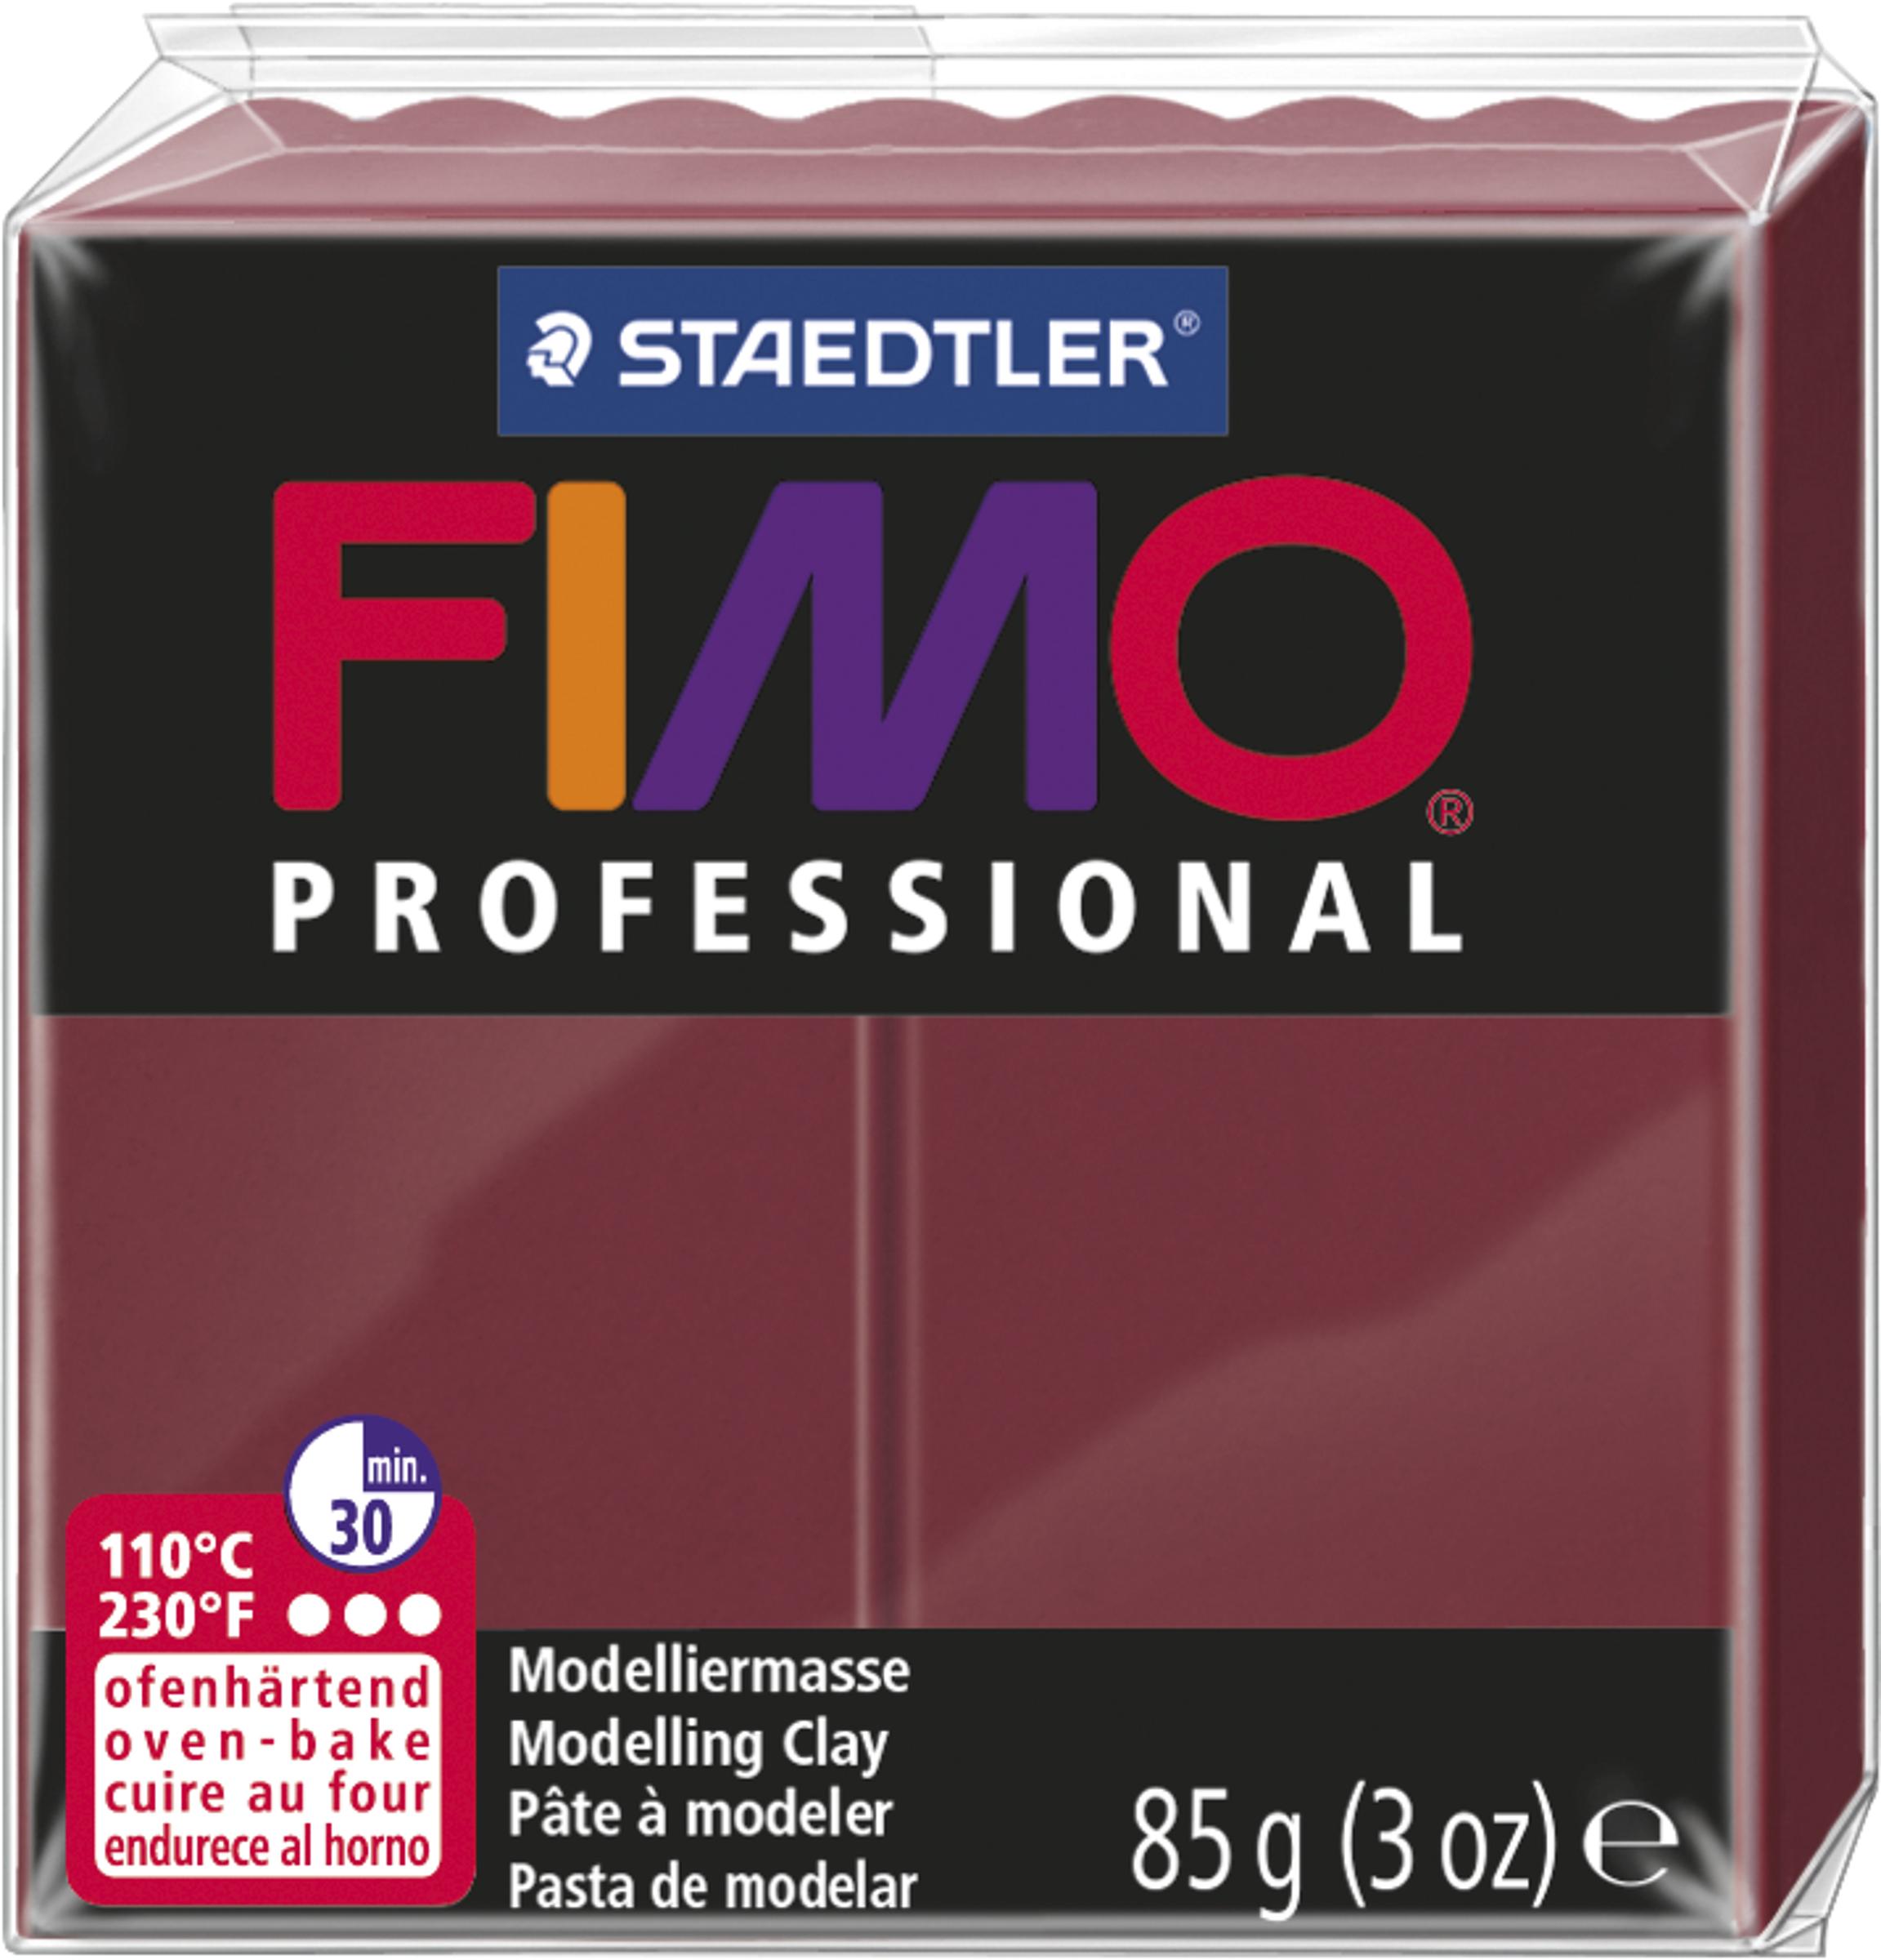 FIMO Professional Modelliermasse 1275g 15er Set Farbwahl per Mail 29,80€/1kg 